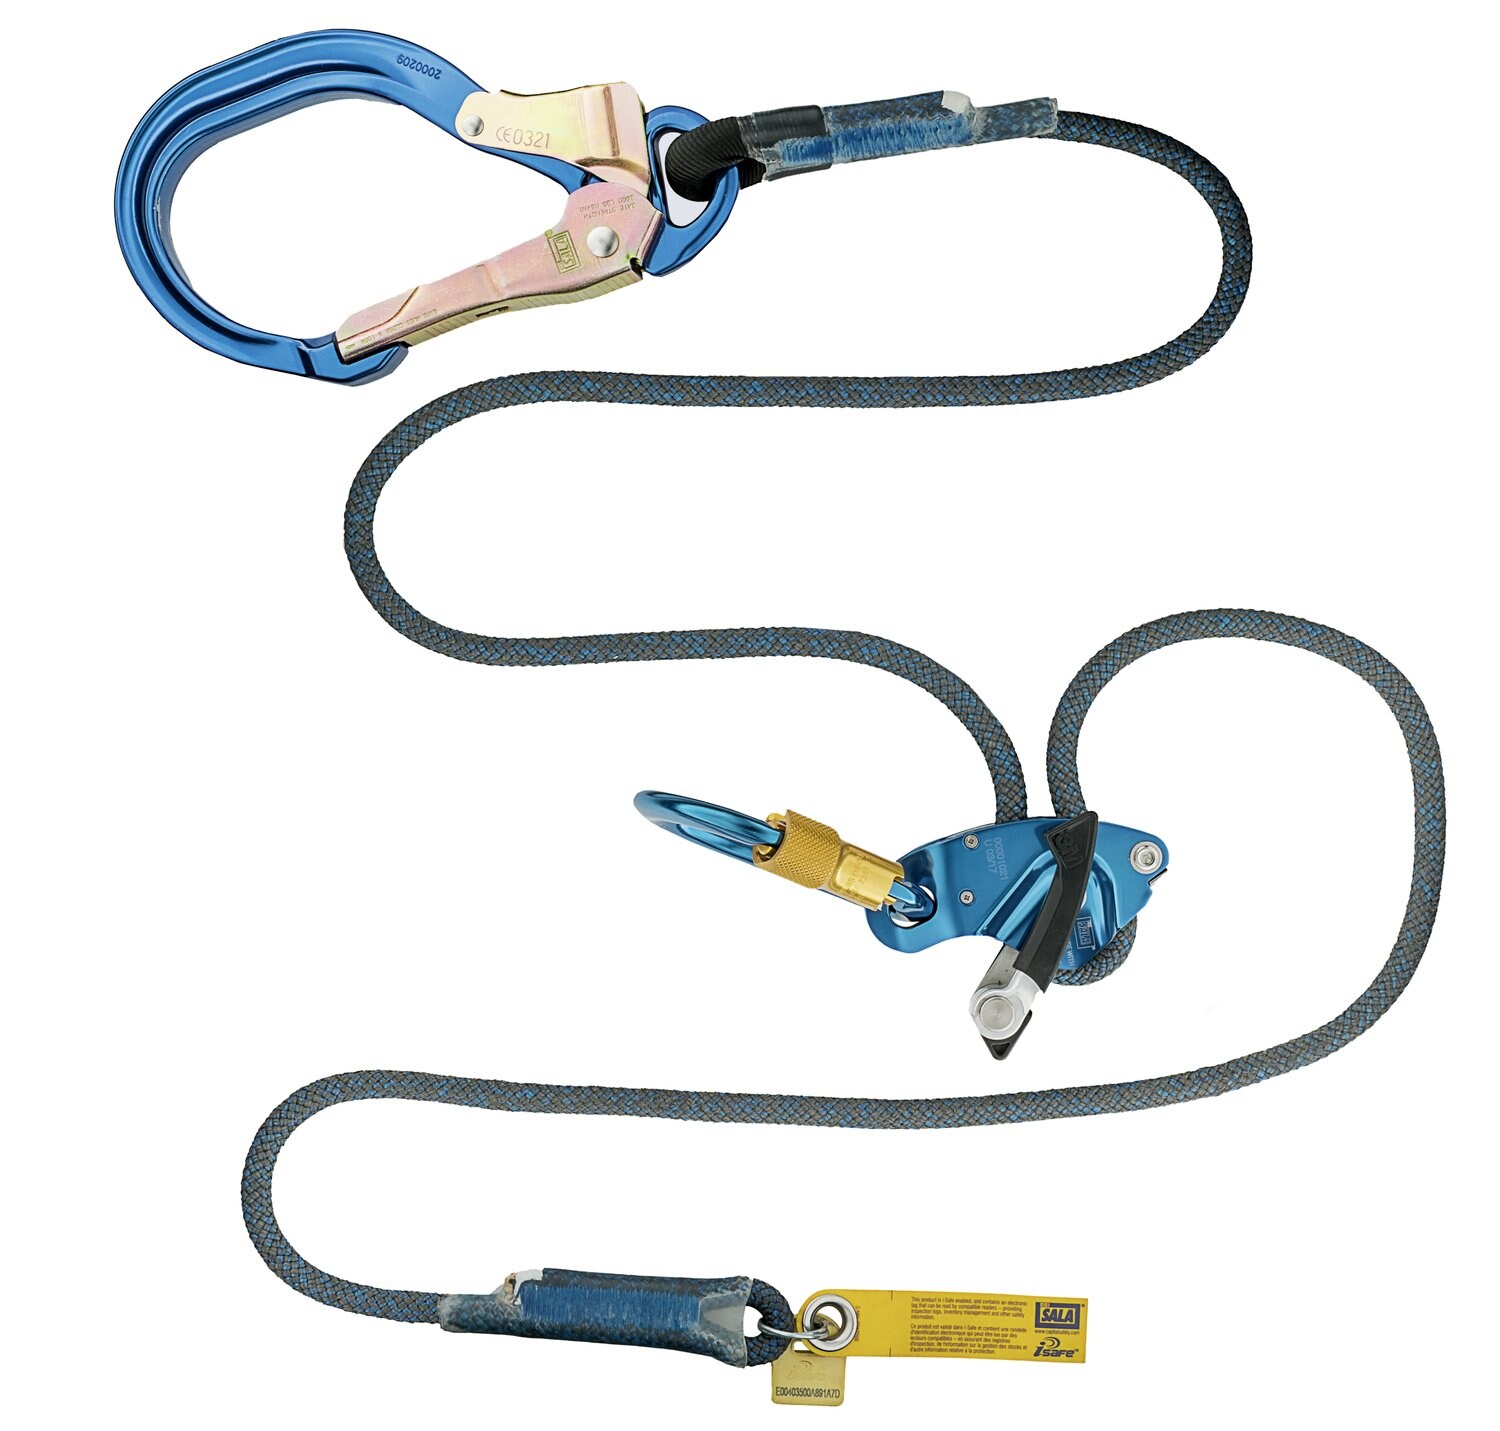 7012817100 - 3M DBI-SALA Trigger X Adjustable Single Mode Rope Positioning Lanyard 1234090, 1/2 in Aramid Kernmantle, 6 ft